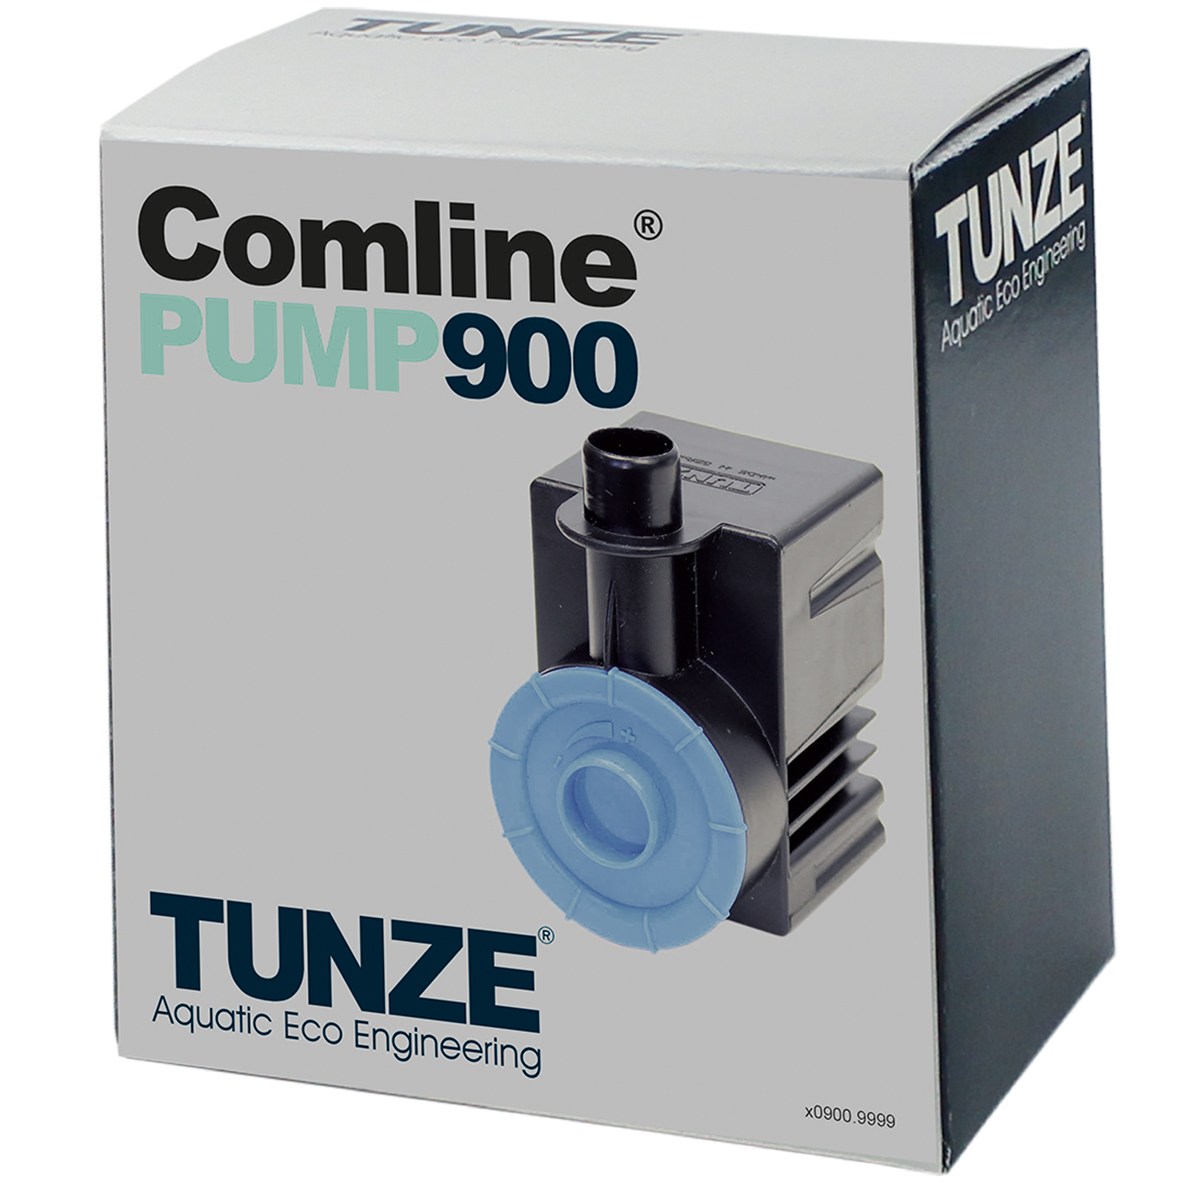 Comline® Pump 900